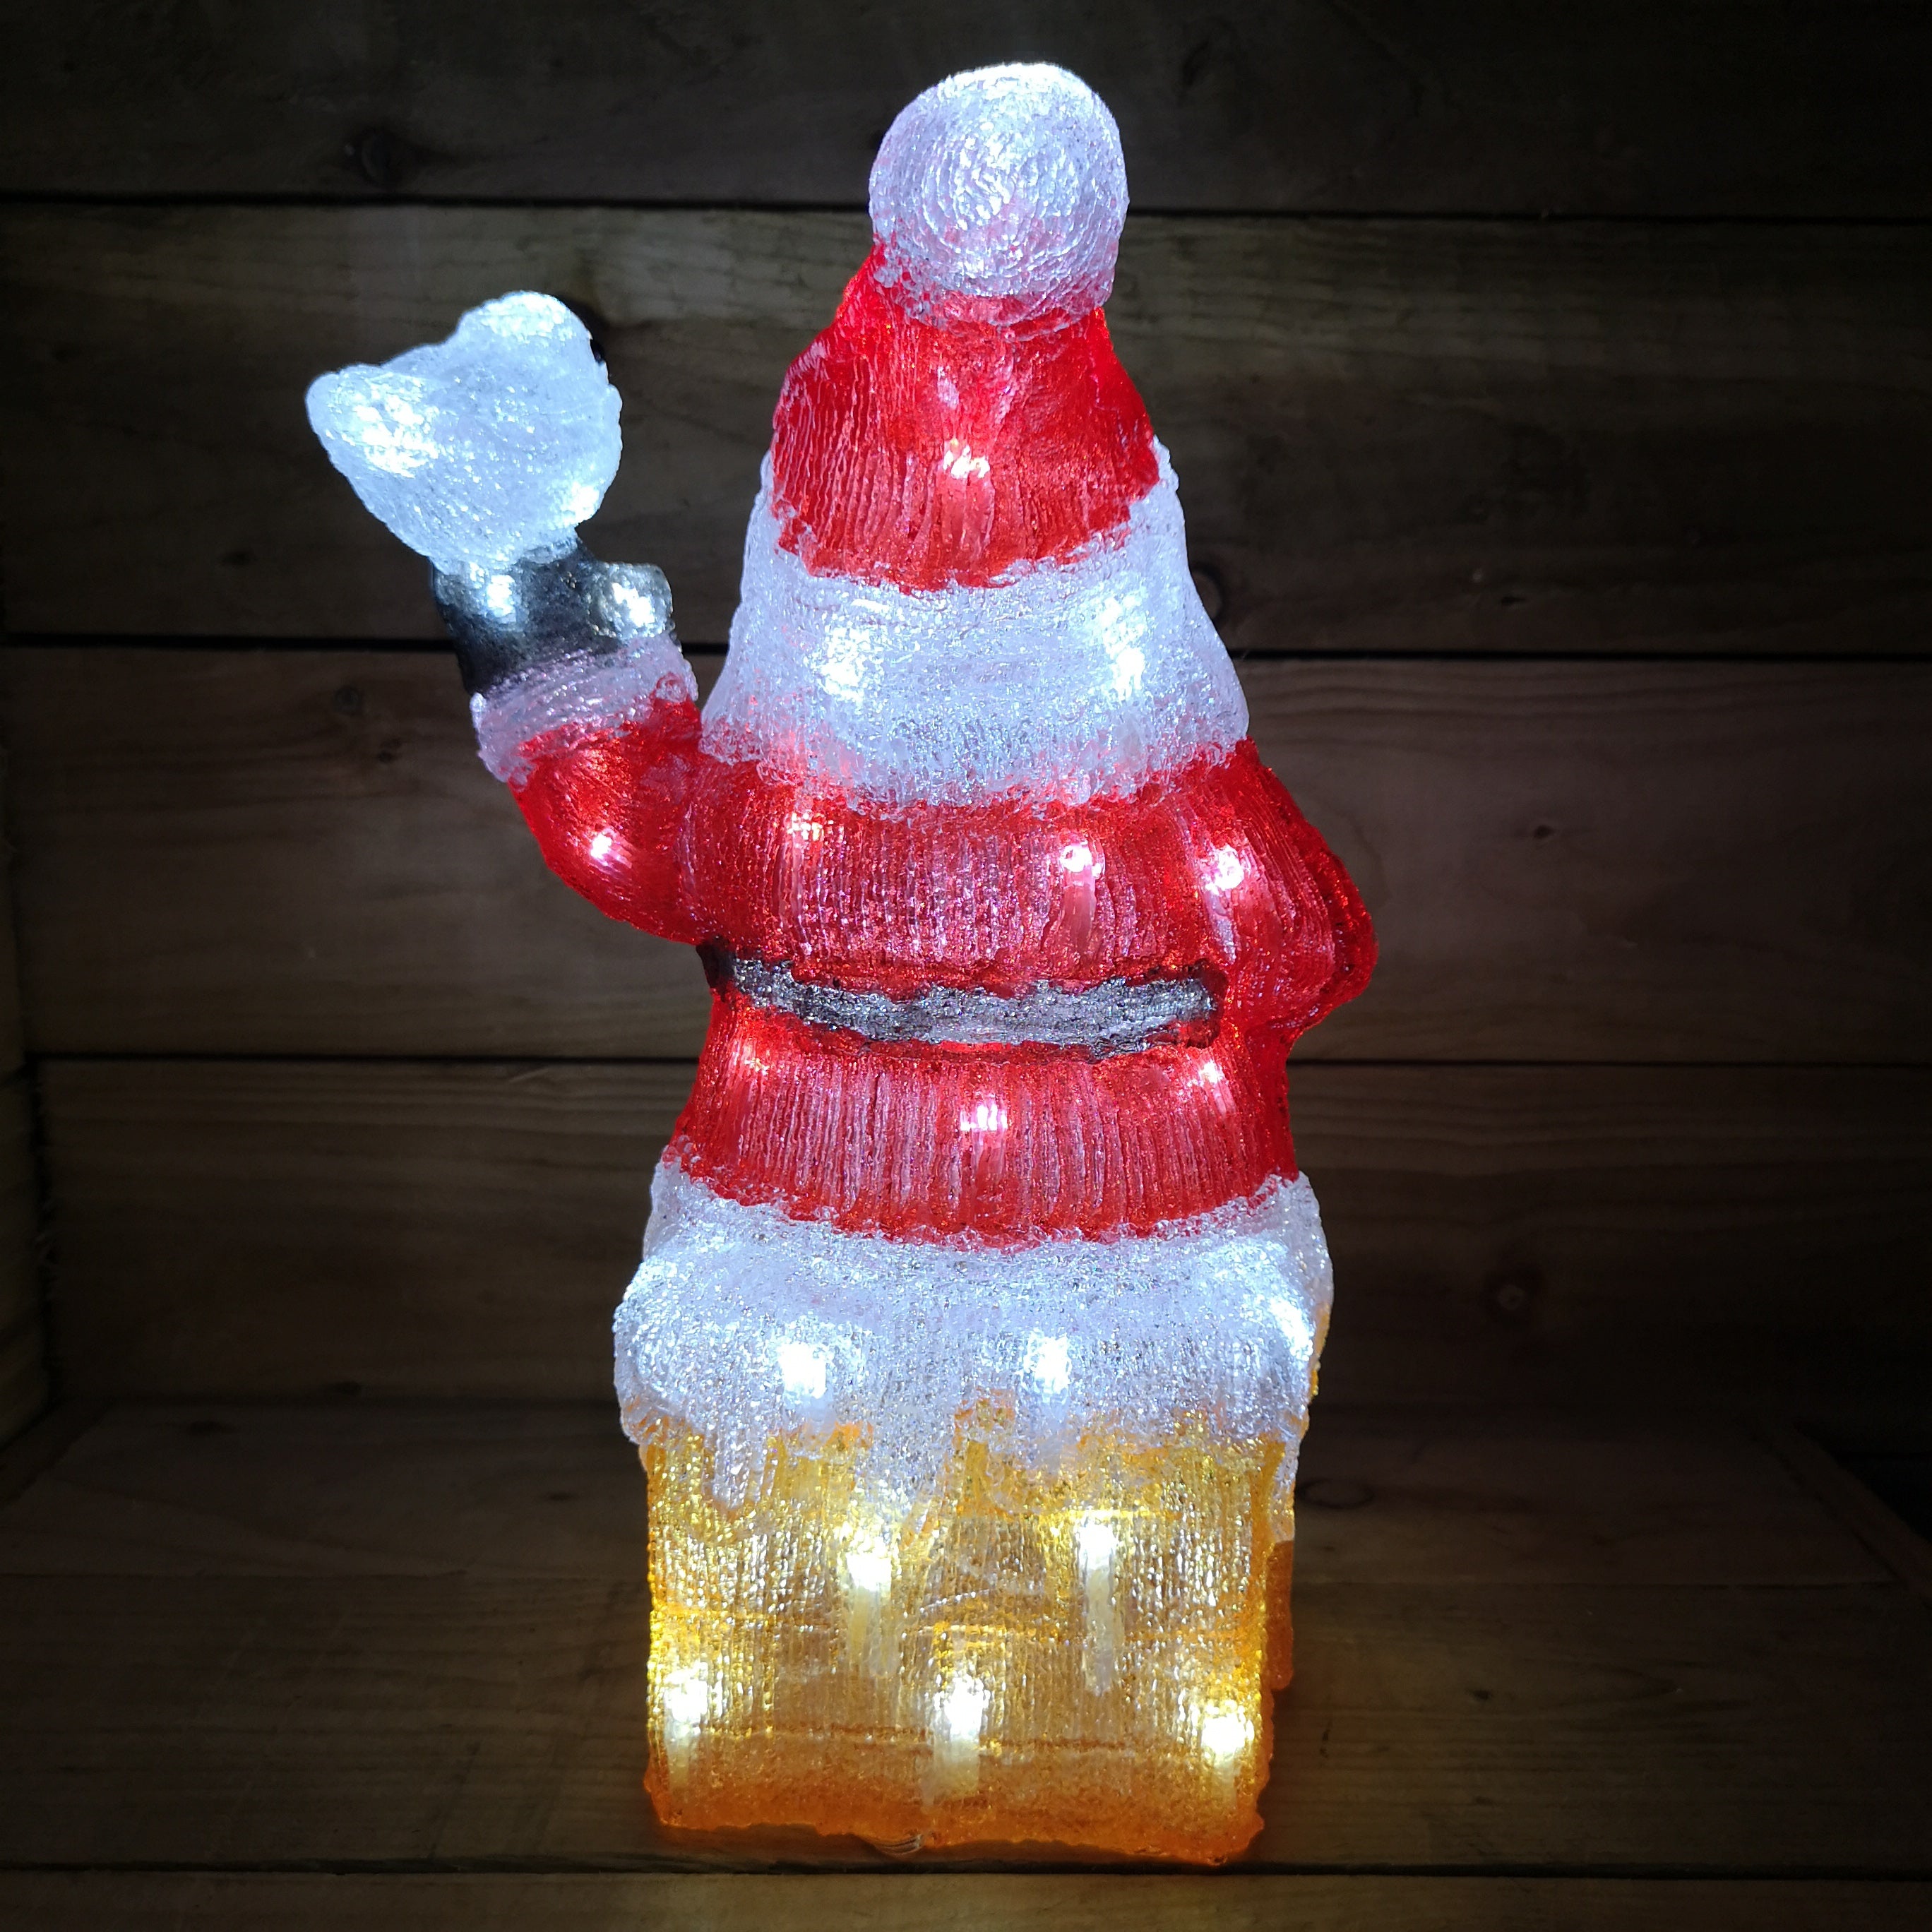 39cm Festive Acrylic Lit Sitting Santa Bird Outdoor Christmas Decoration 40 LED